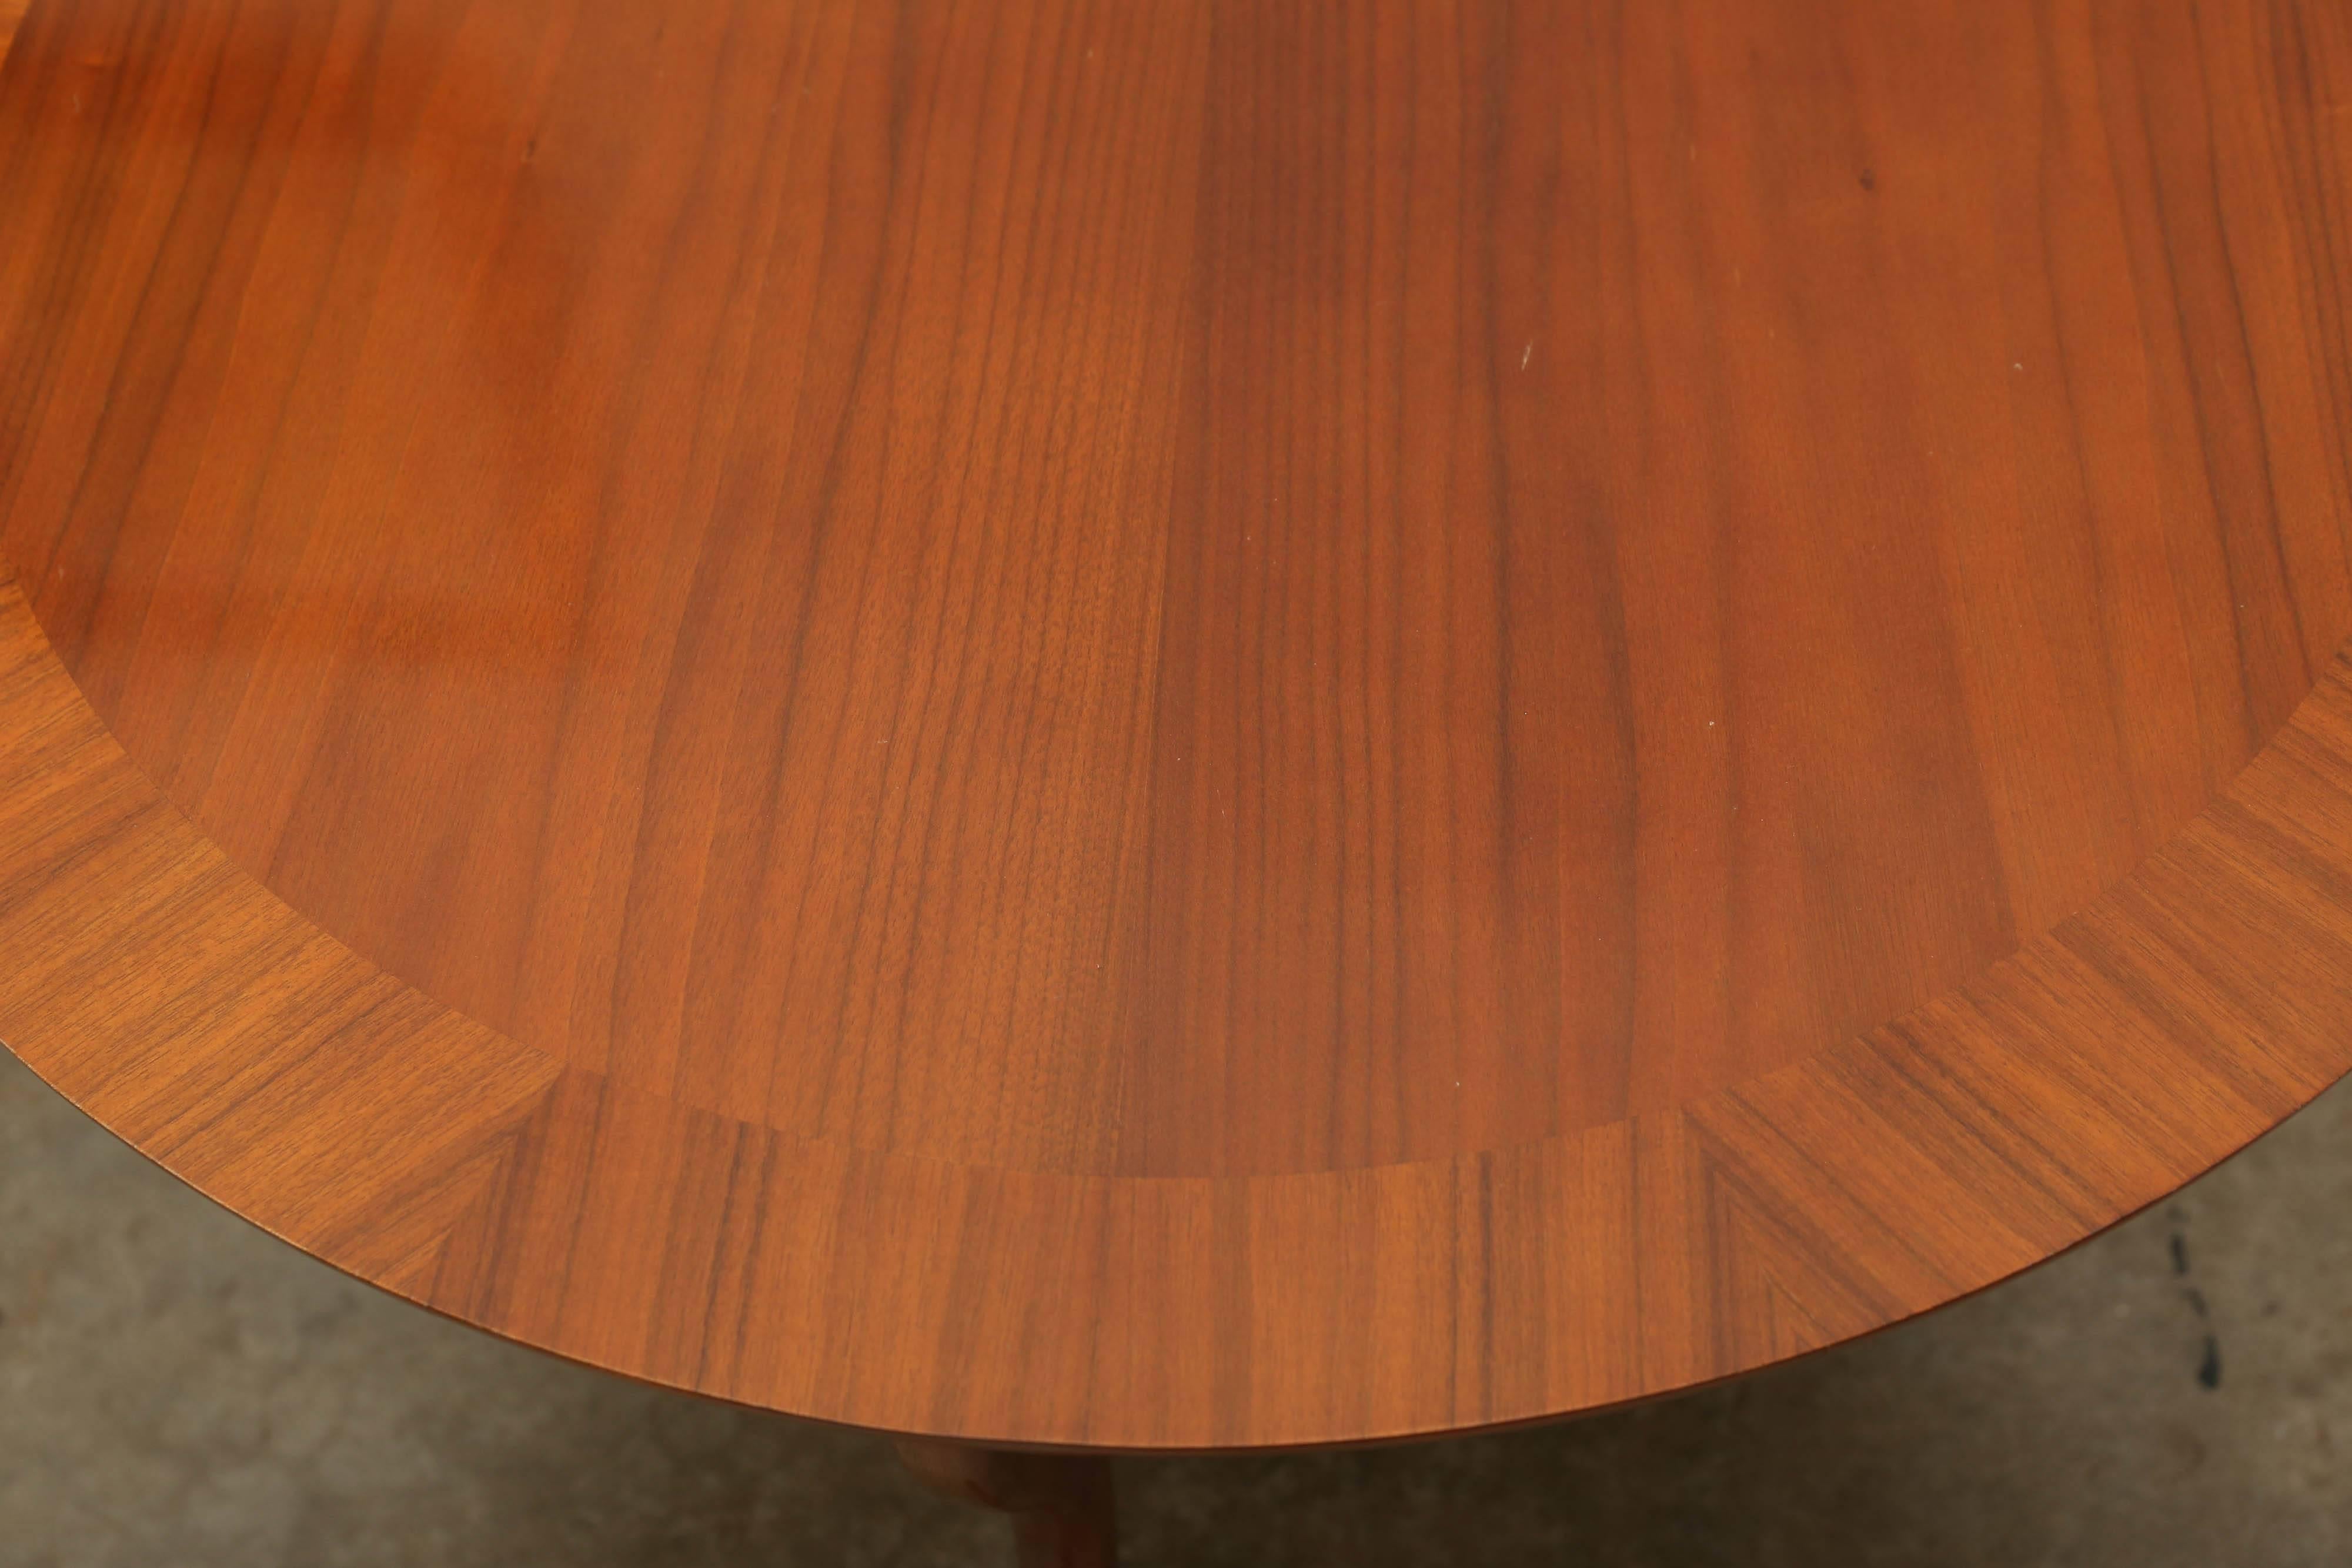 Wood Two-Tier Walnut Saber Leg Occasional Table by Robsjohn-Gibbings for Widdicomb